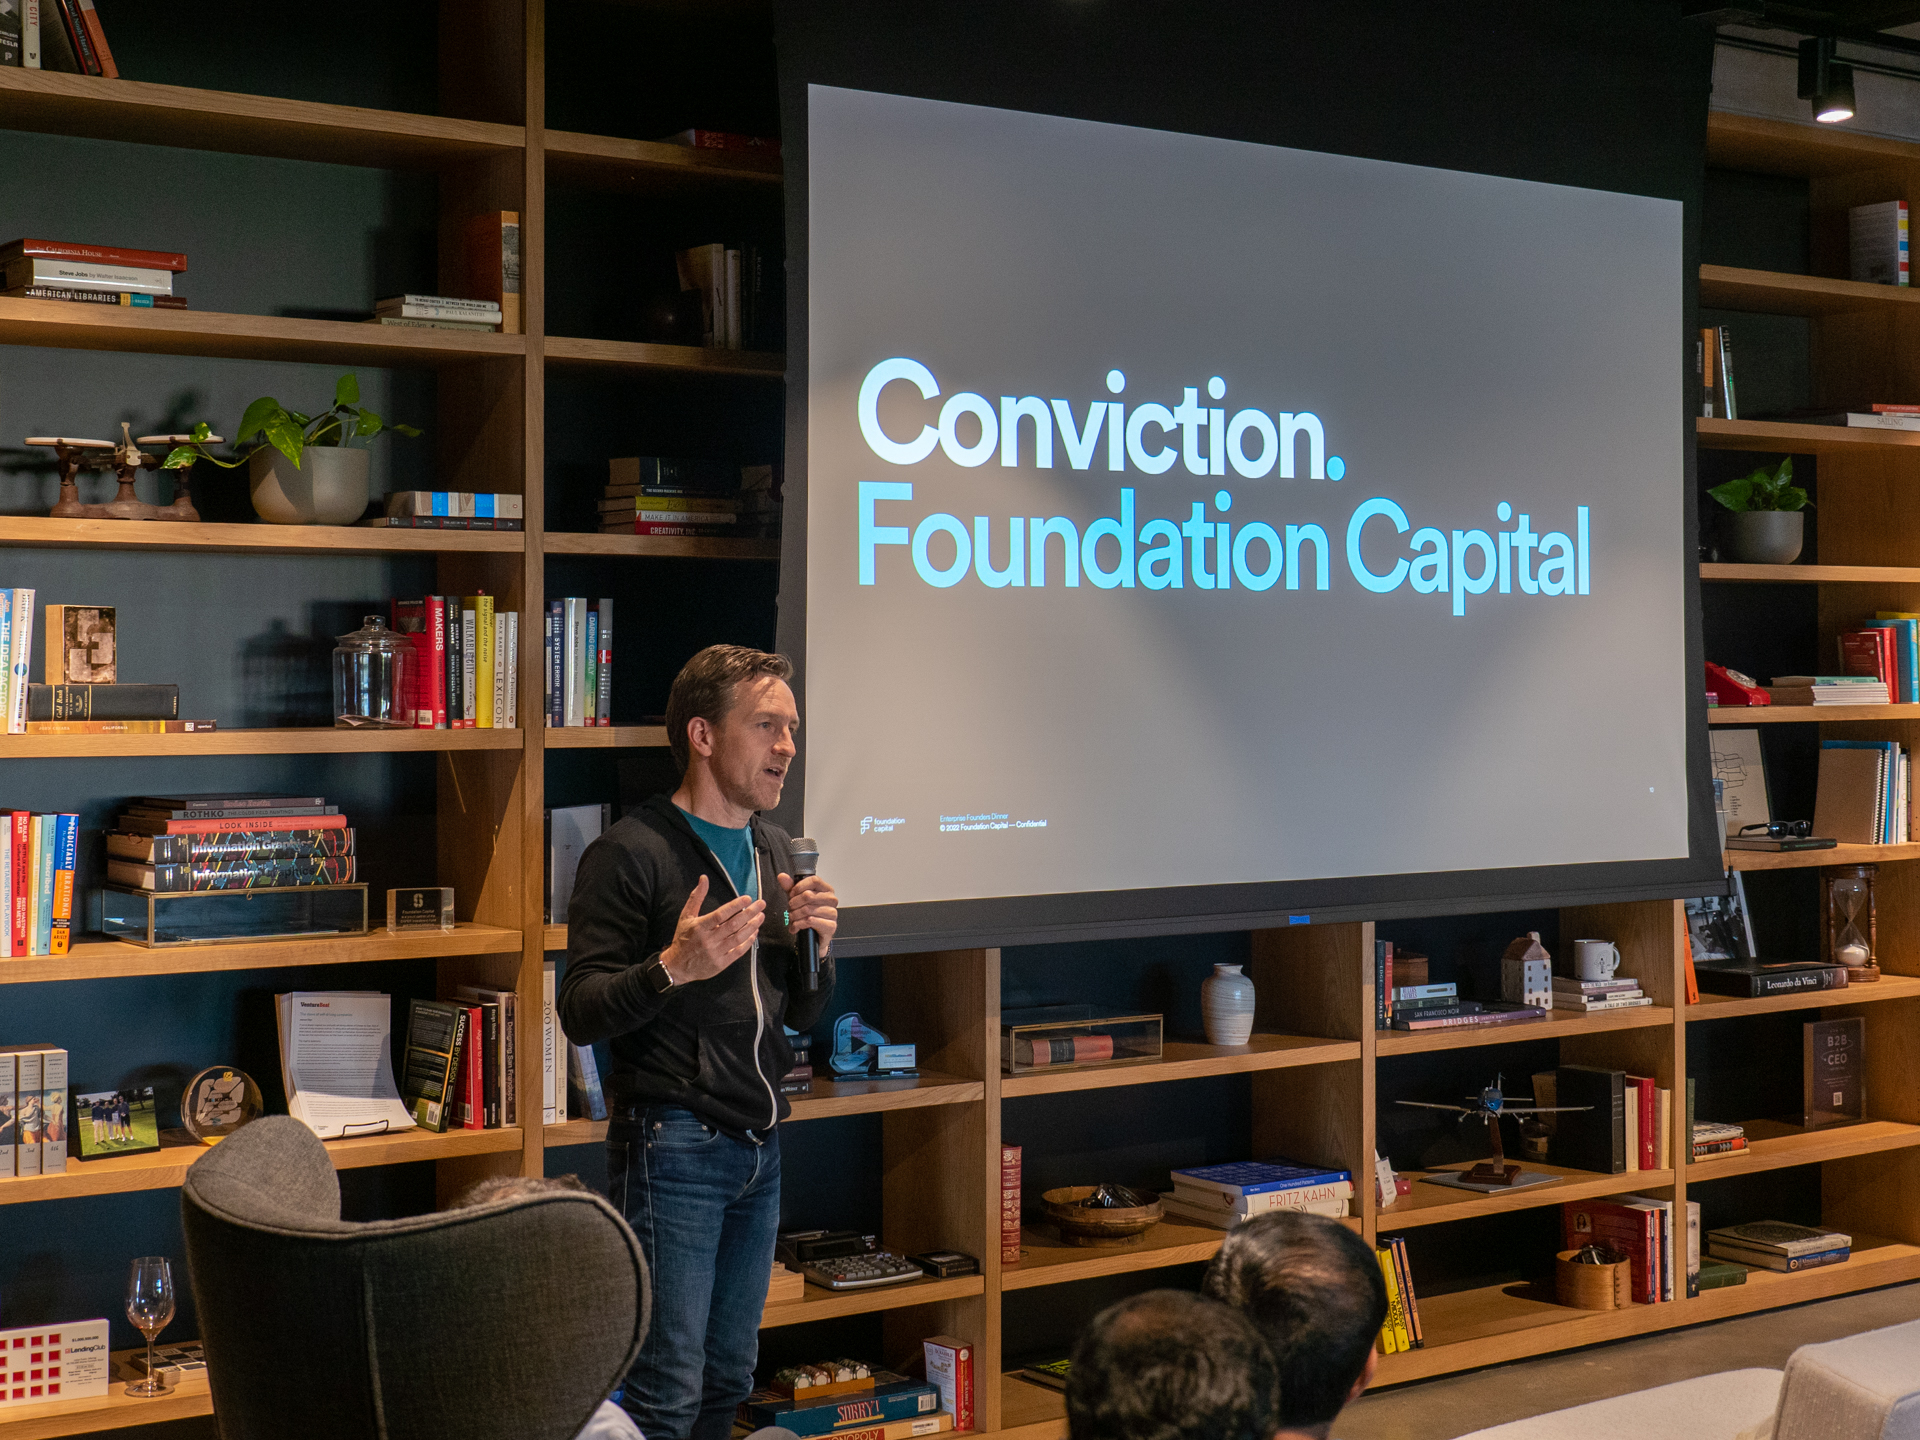 Steve Vassalo giving a speech about Conviction at Foundation Capital